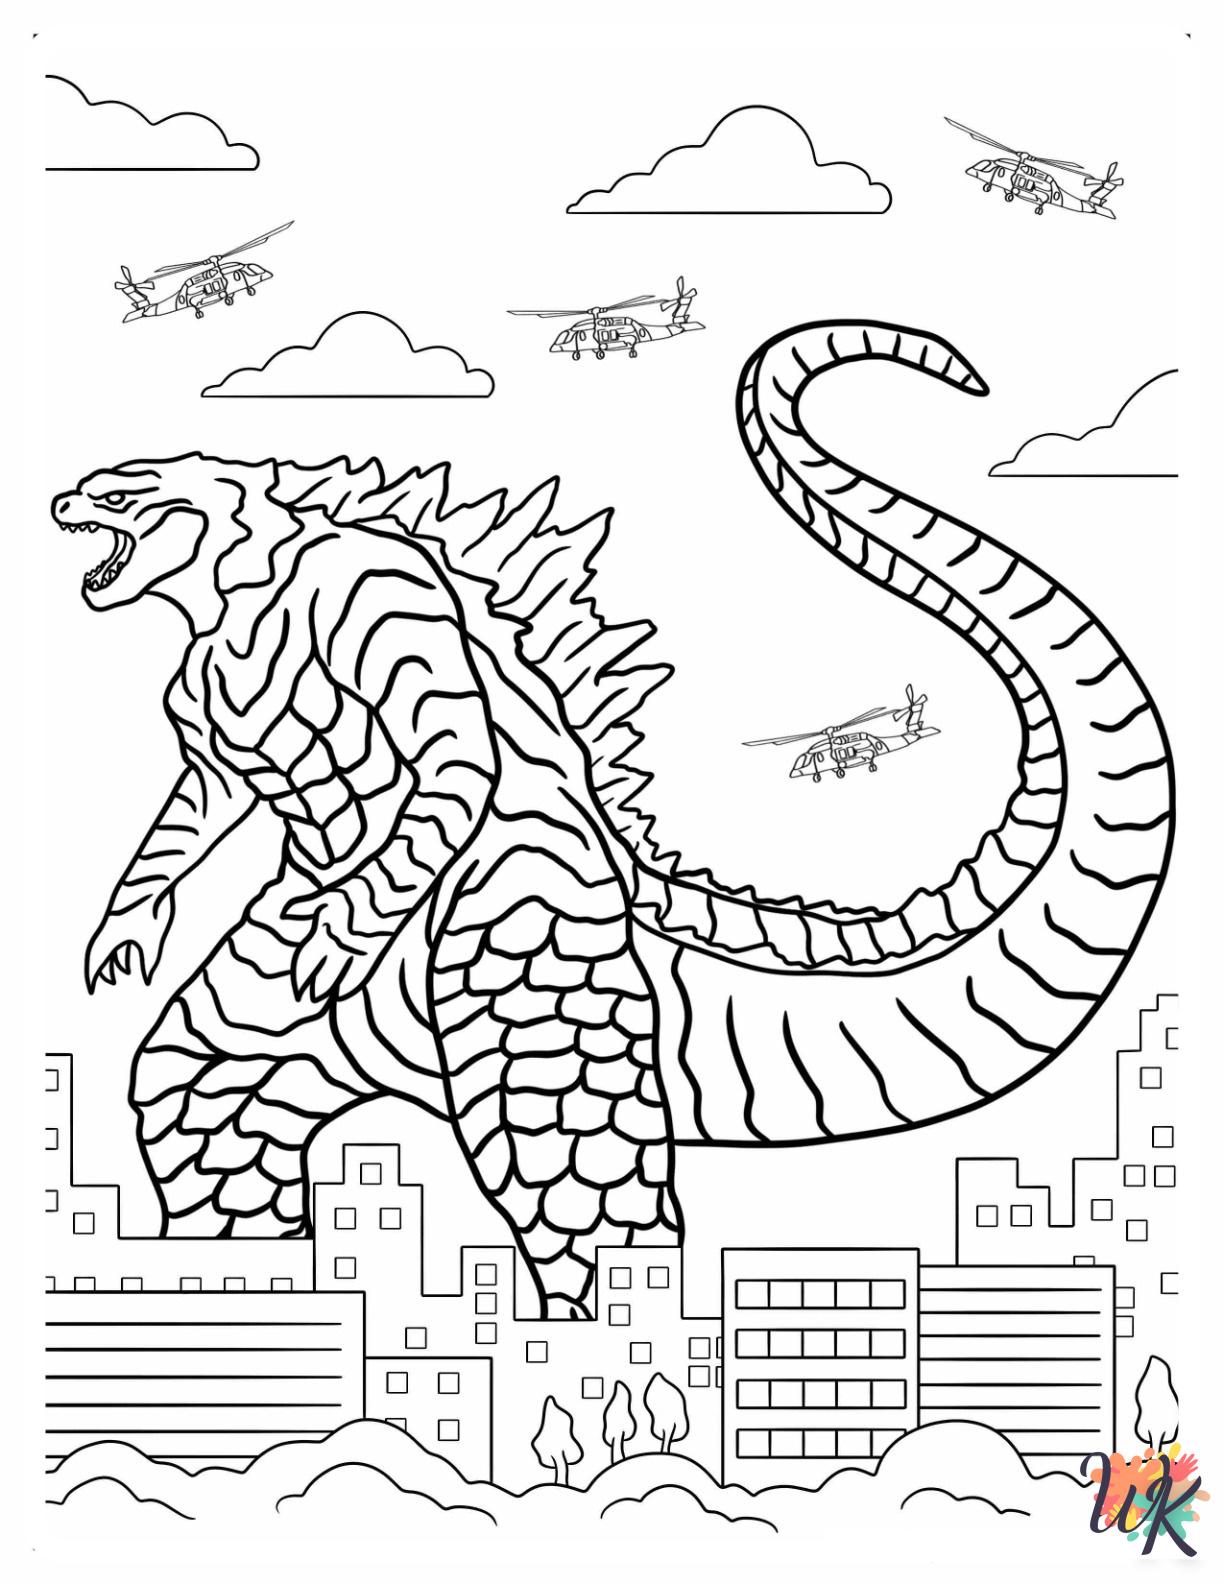 Godzilla Coloring Pages 5